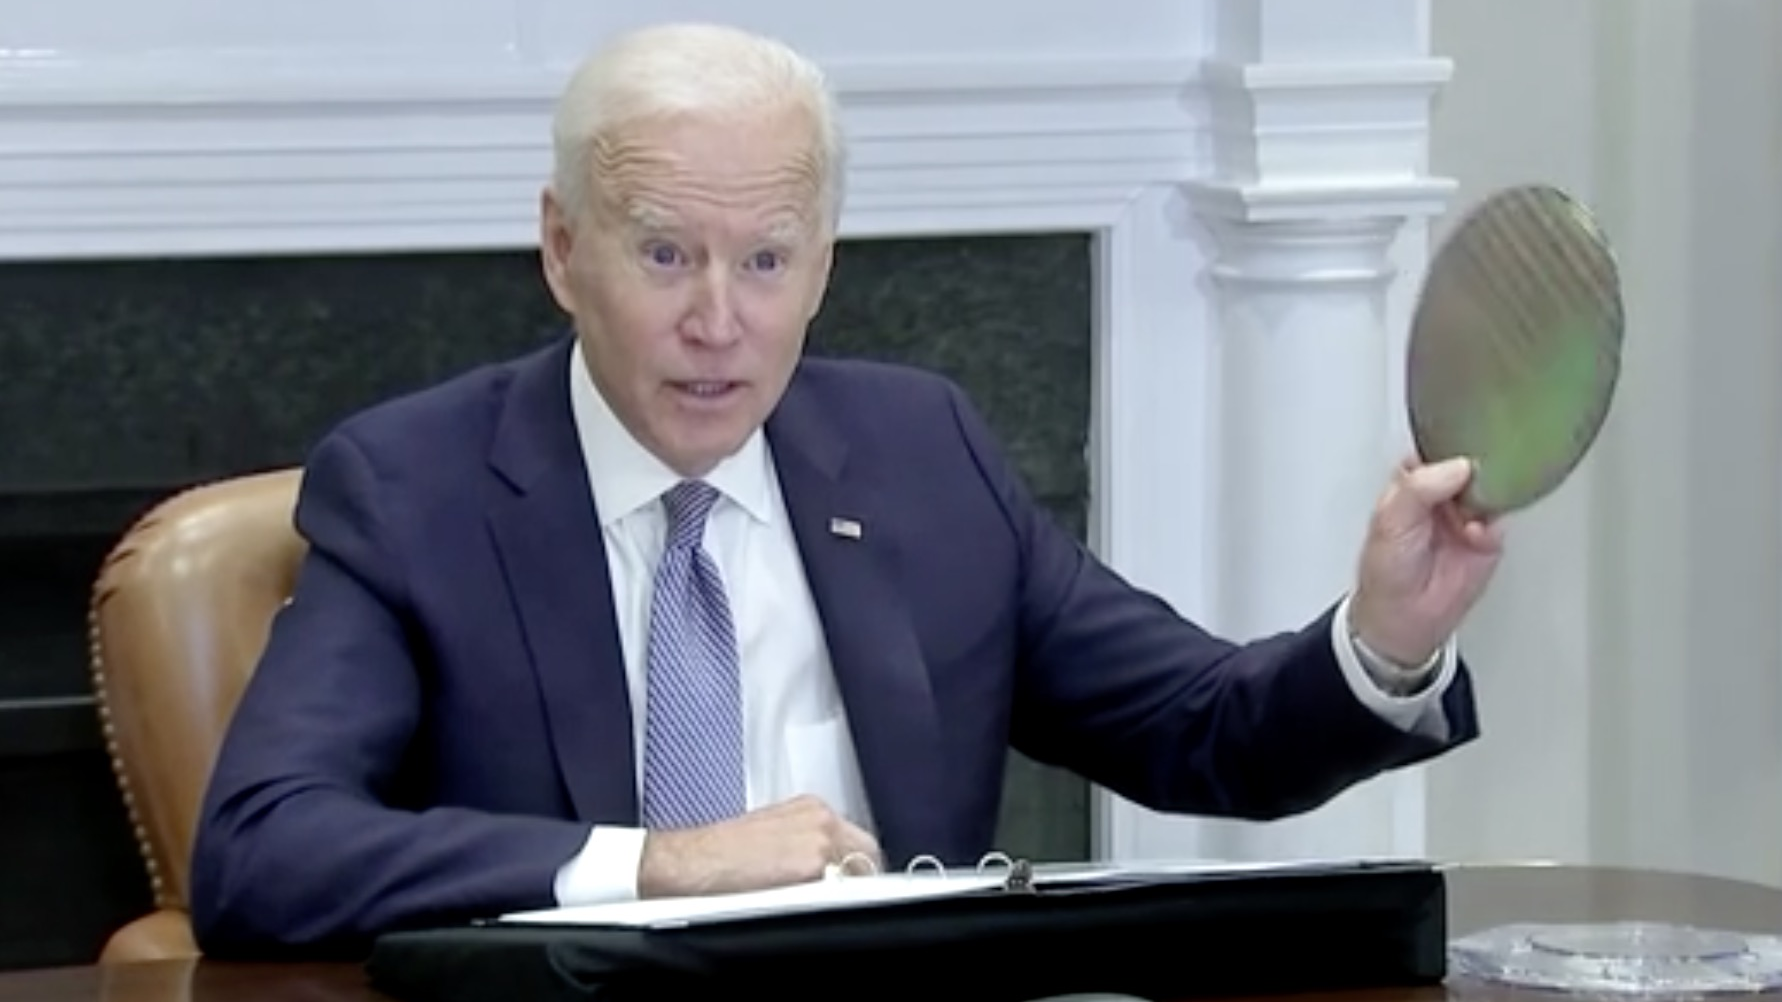 U.S. President Joe Biden holds a wafer as he speaks at White House Summit in Washington, U.S., April 12, 2021. /Reuters